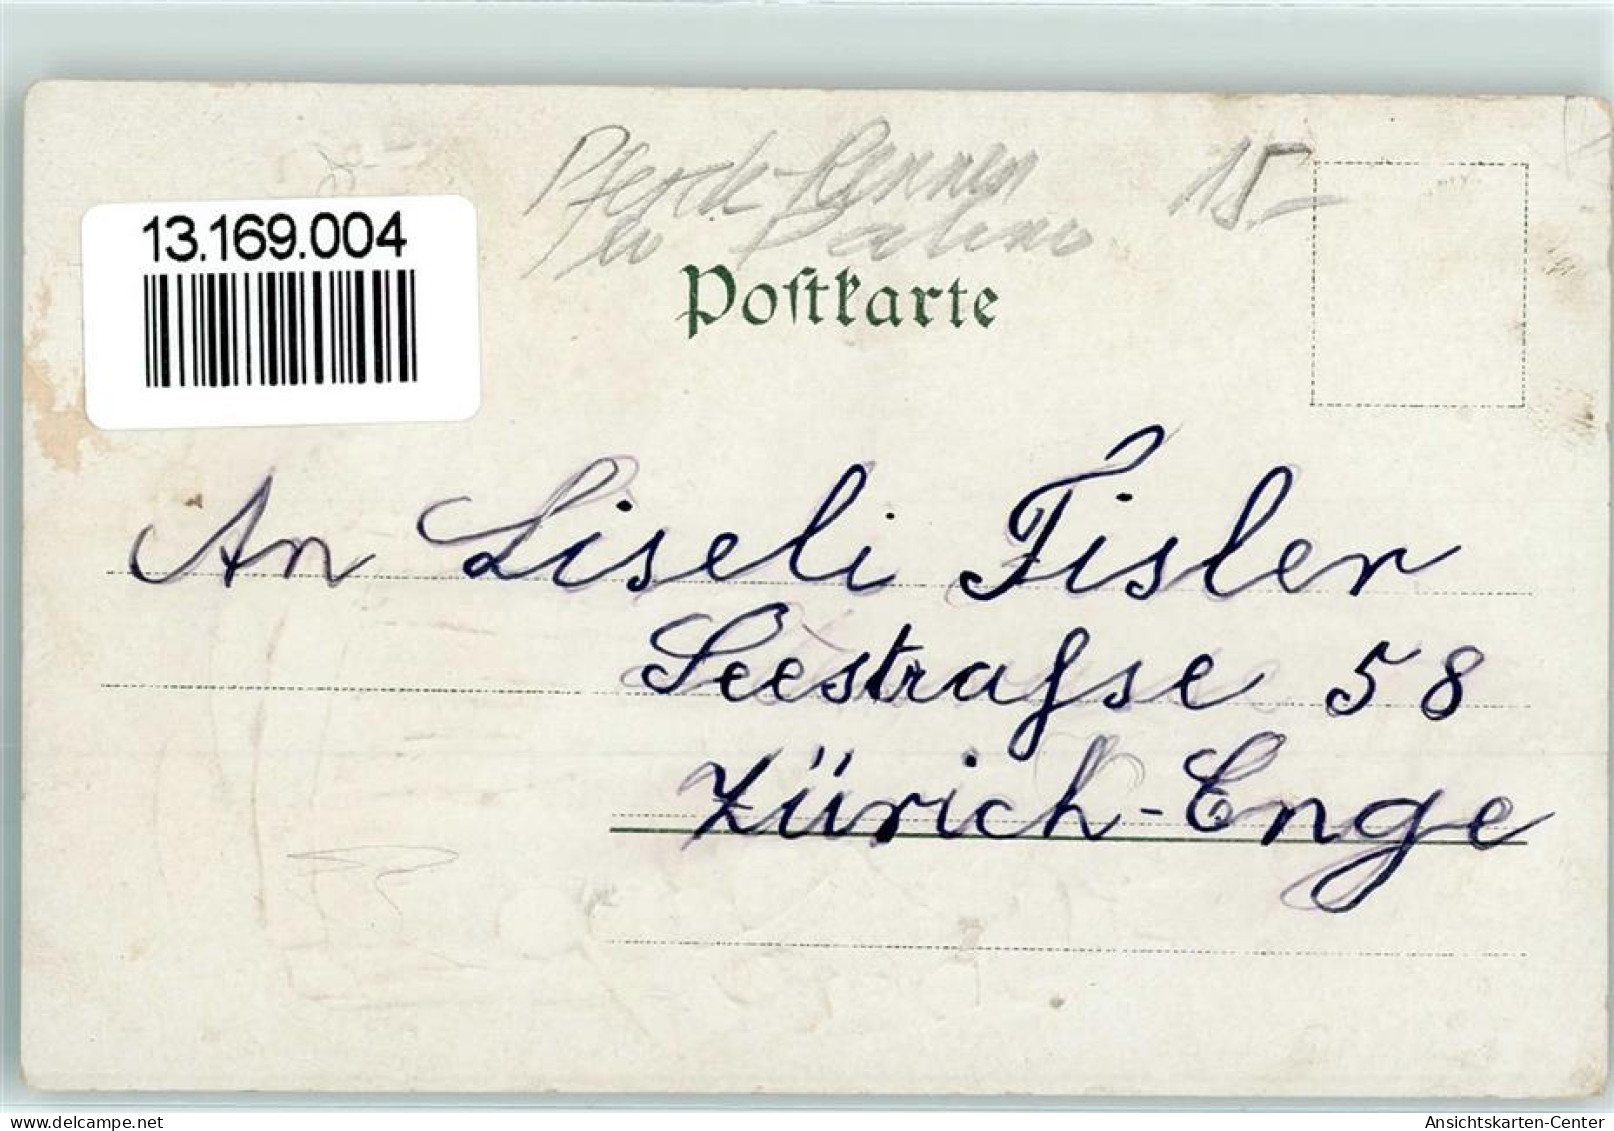 13169004 - Praegedruck Muenchner Kindl Als Puppen  Heliorcolorkarte  Zieher, Ottmar - Expositions